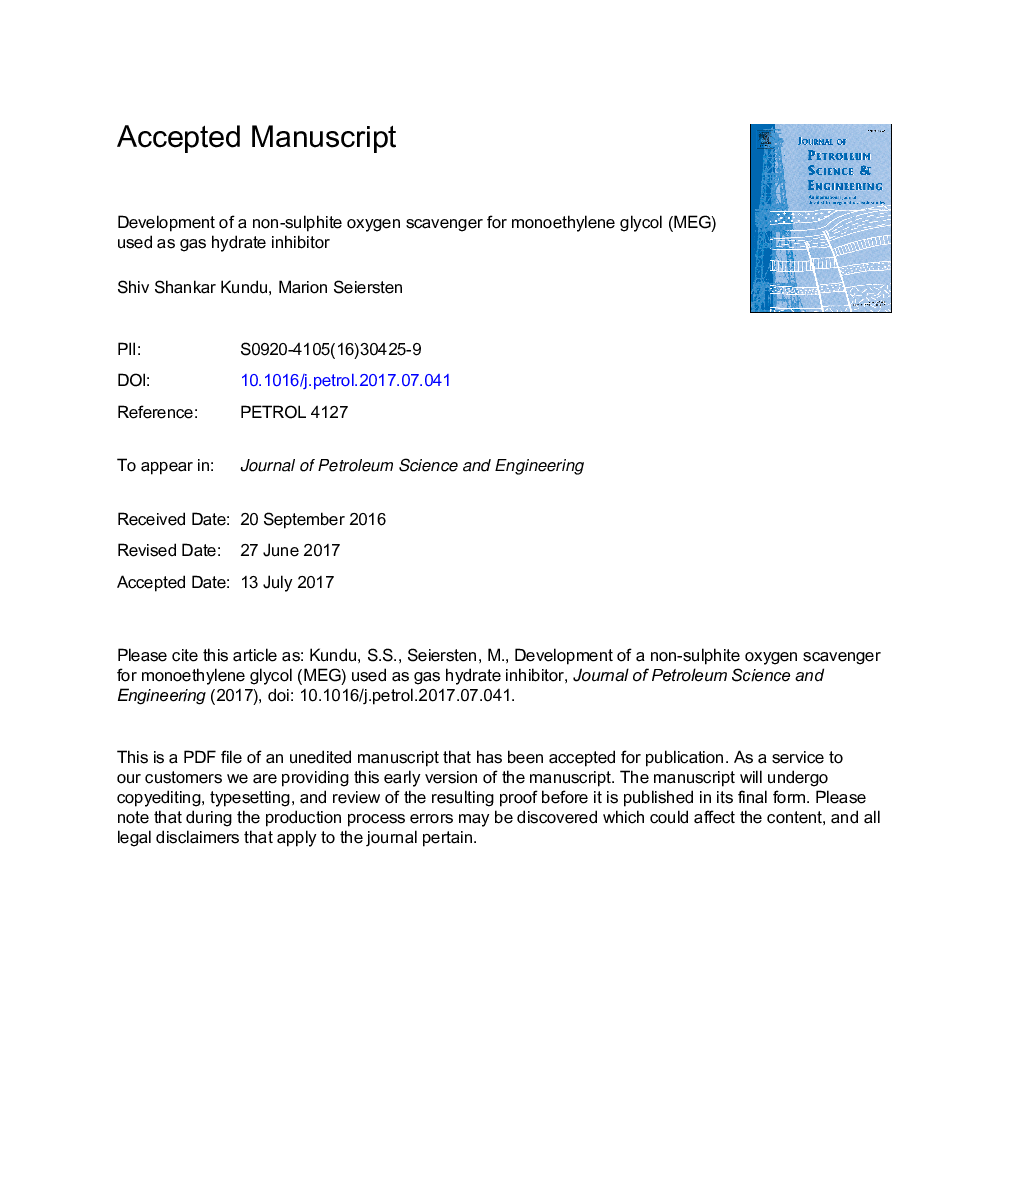 Development of a non-sulphite oxygen scavenger for monoethylene glycol (MEG) used as gas hydrate inhibitor